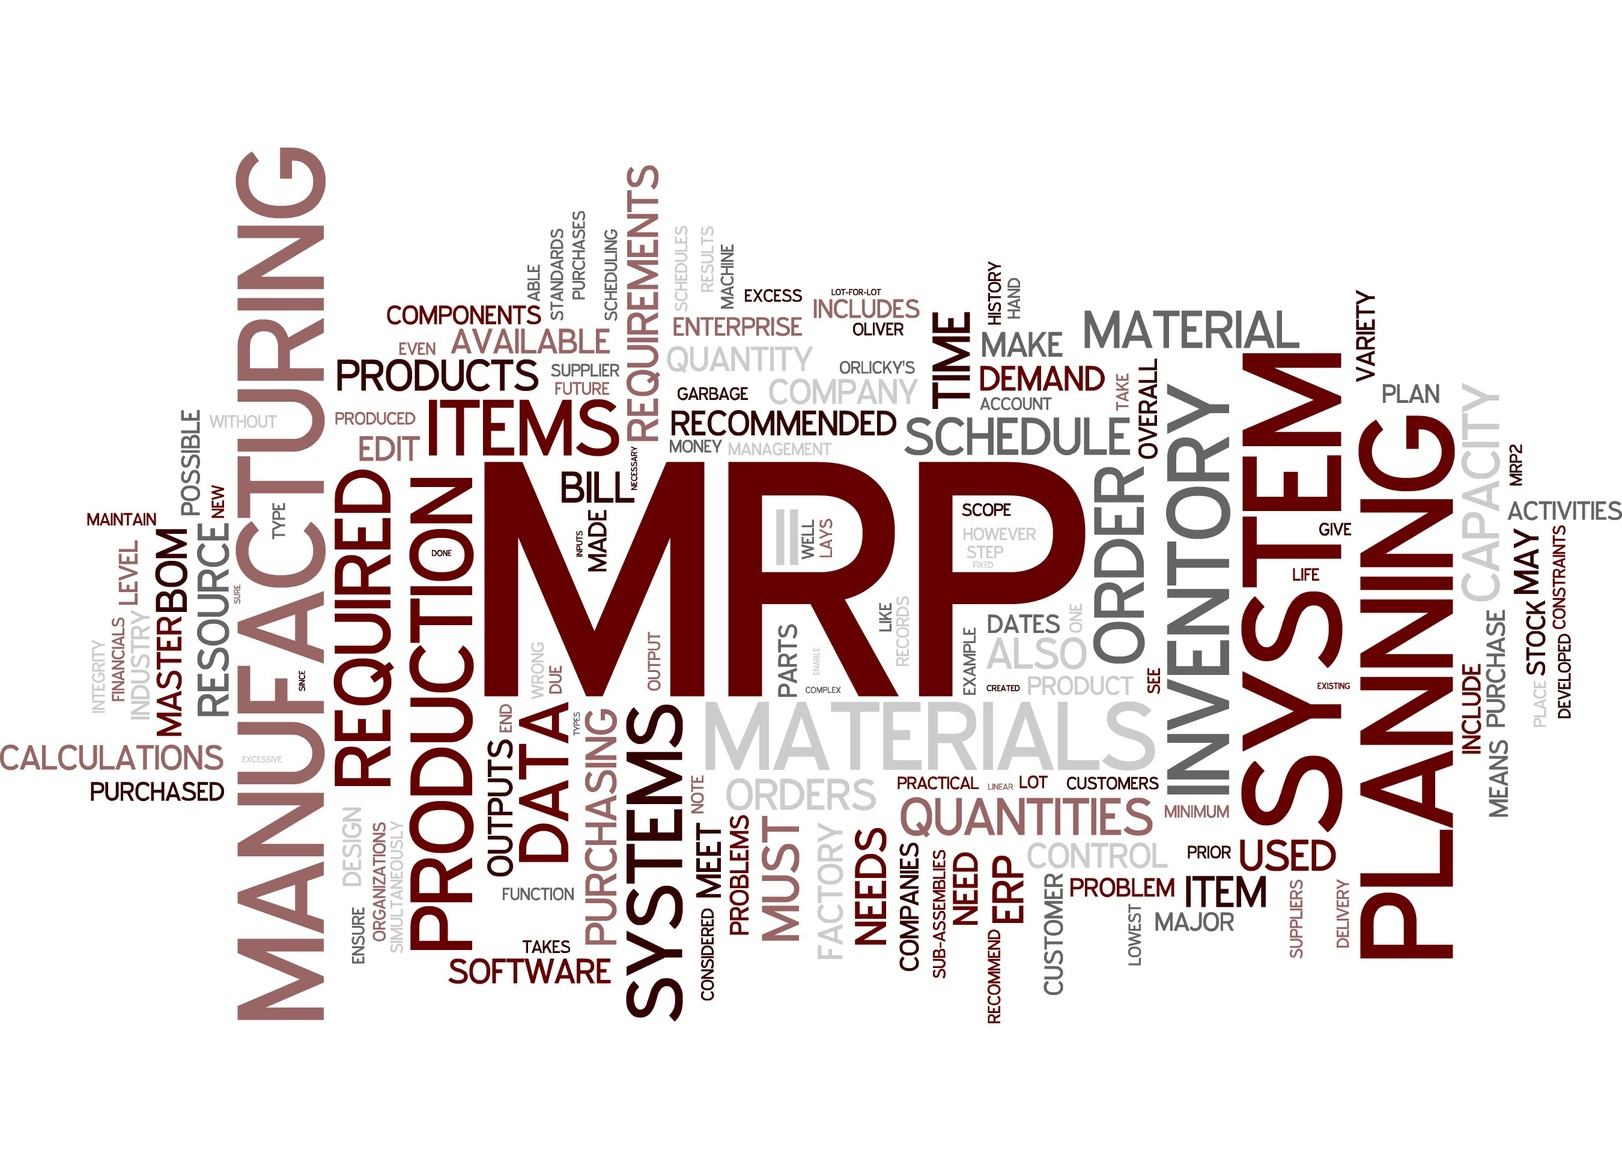 Requirements planning. Система Mrp-1. Mrp (material requirements planning) - планирование потребности в материалах.. Mrp-1 система в логистике. Mrp система картинки.